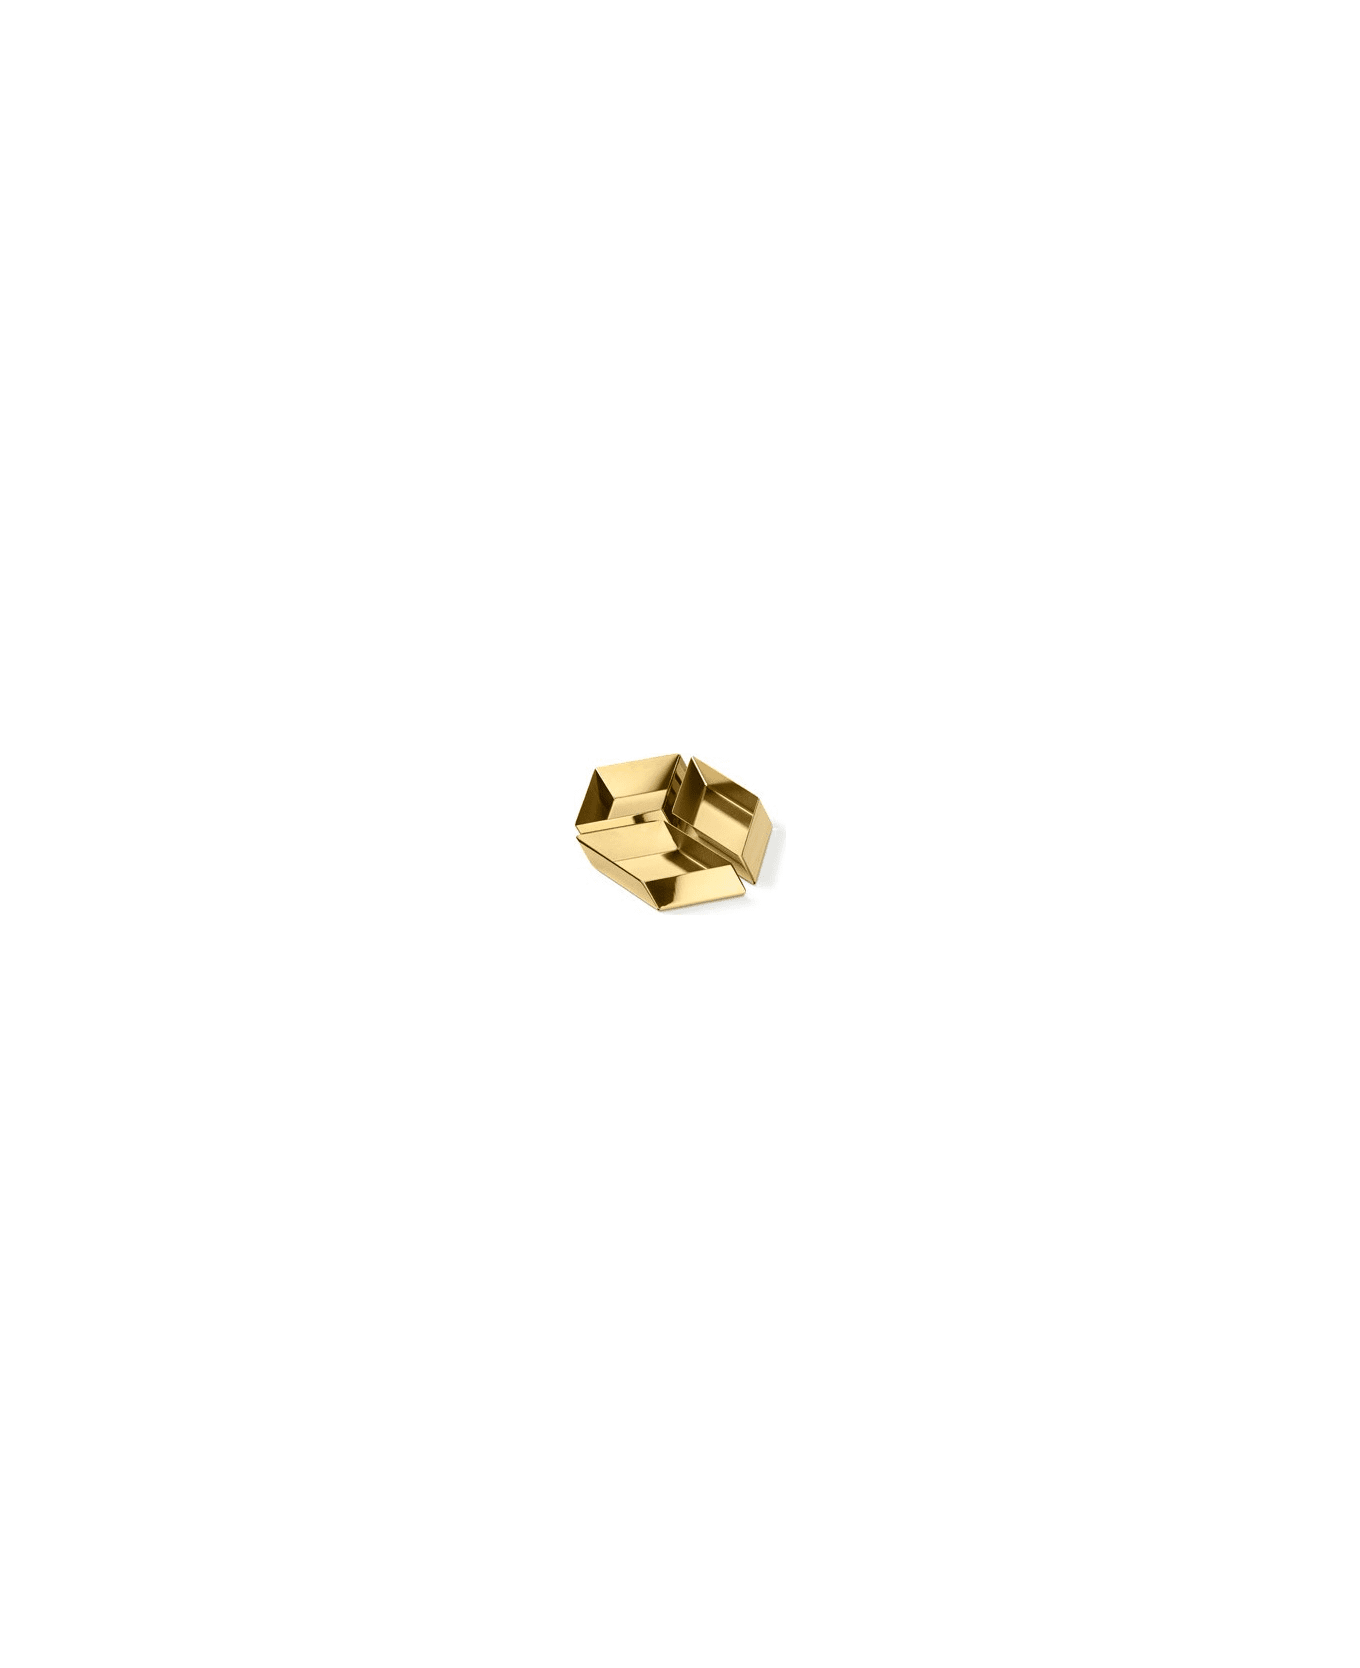 Ghidini 1961 Axonometry - Small Cube Polished Brass - Polished brass